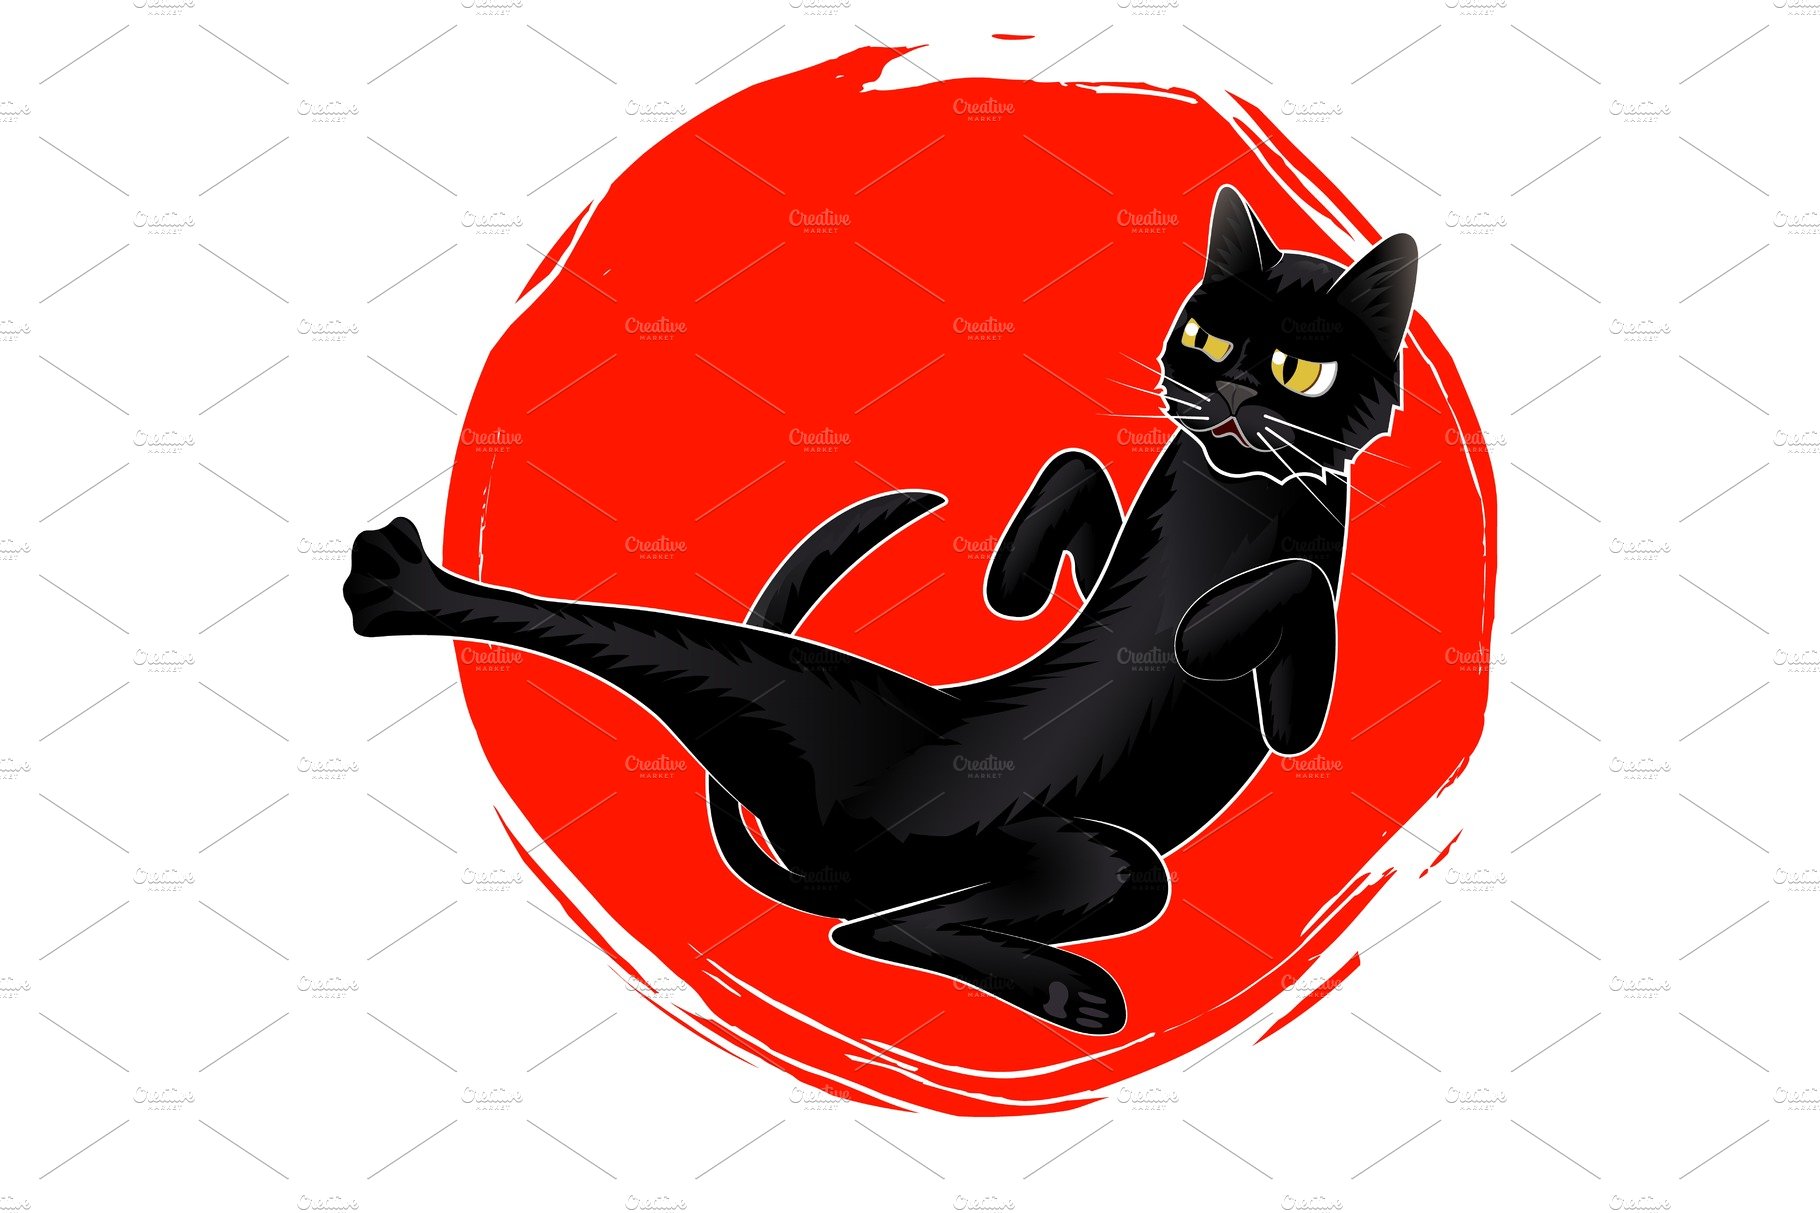 Cute Karate Black Cat cover image.